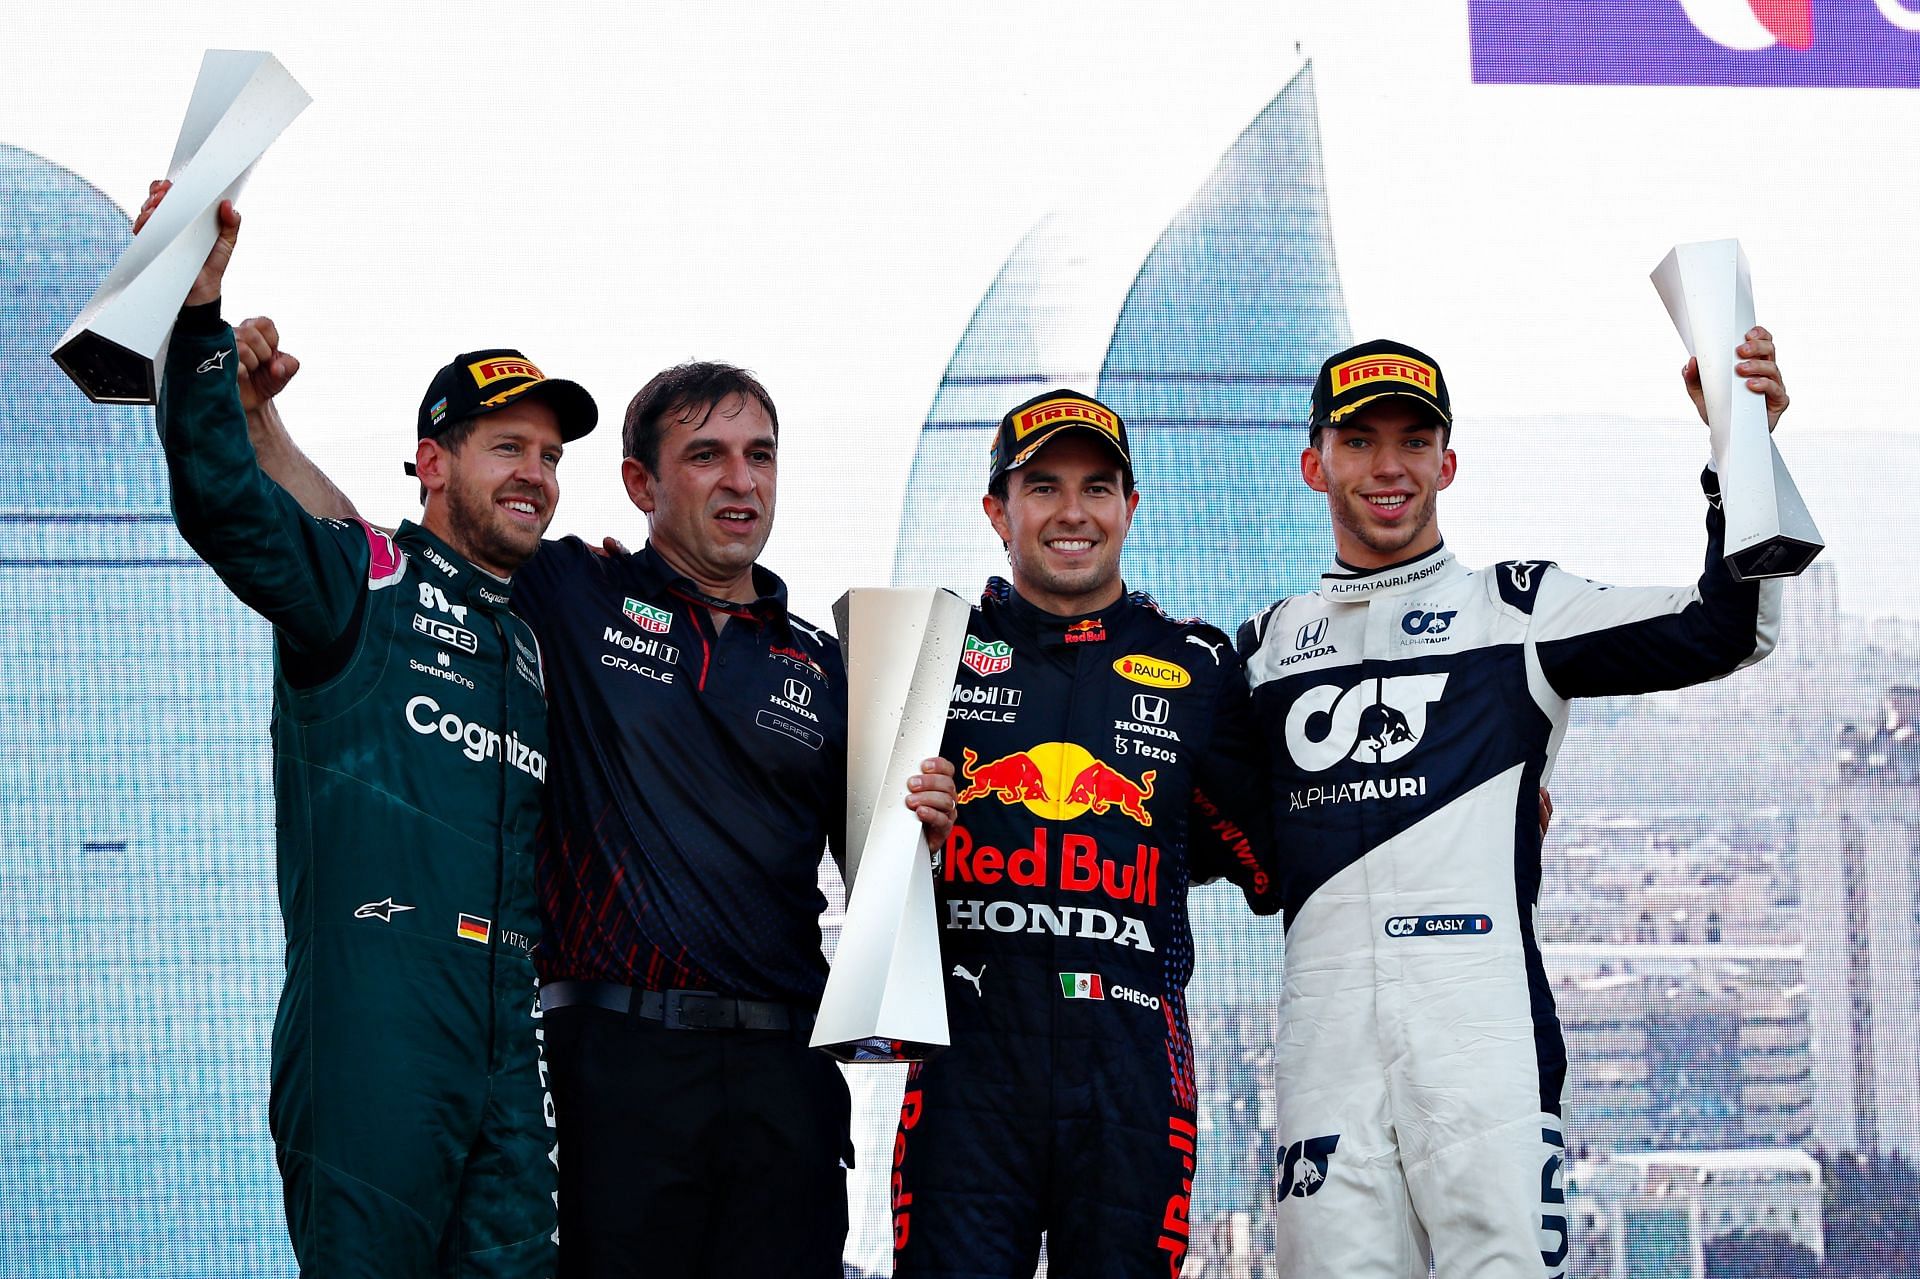 Sergio Perez (3rd from left) and Sebastian Vettel (1st from left) need a good 2022 season